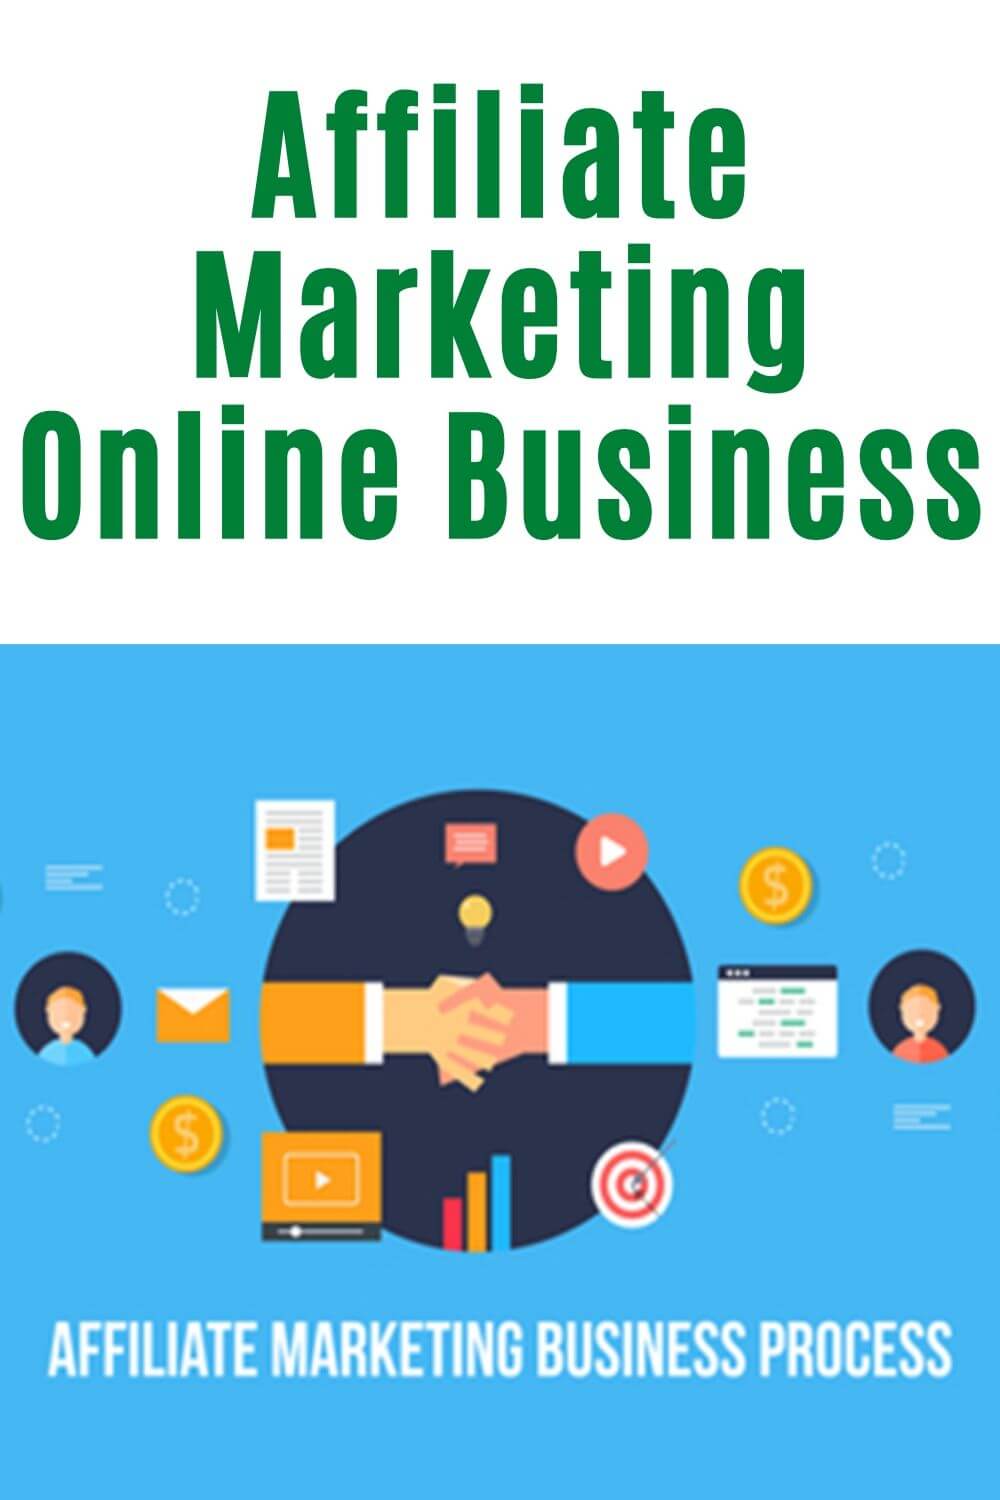 Affiliate marketing online business